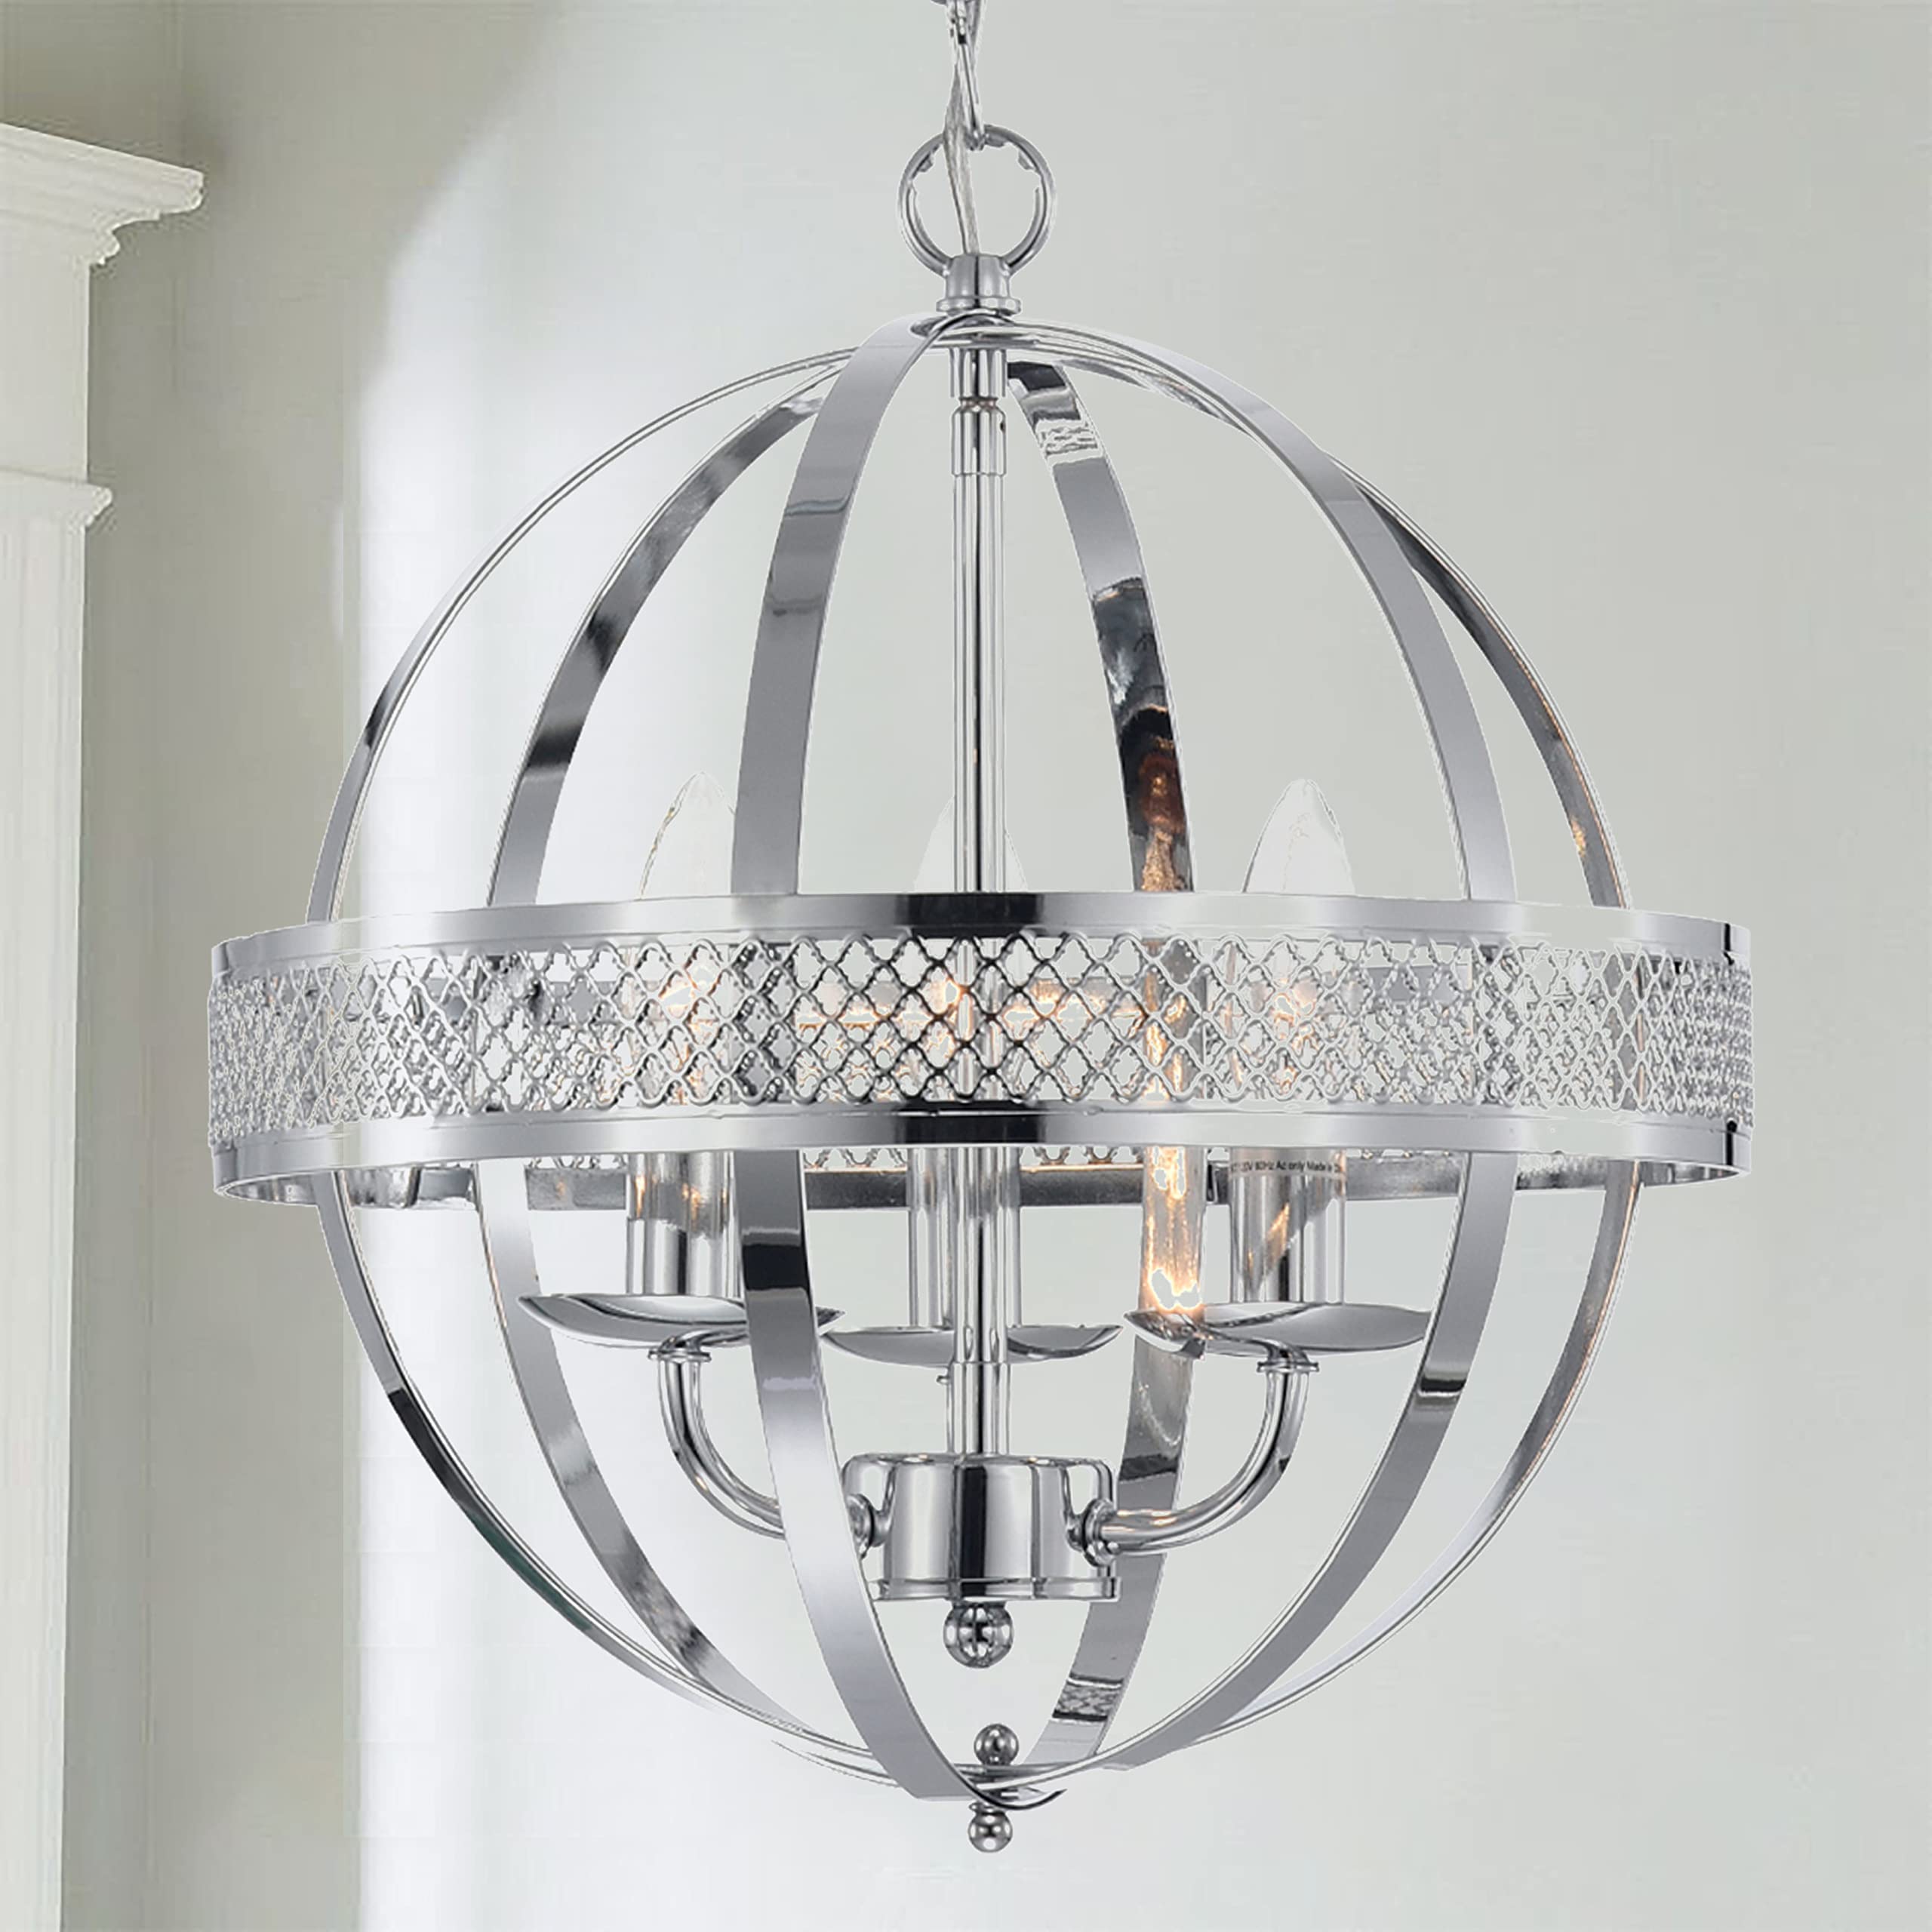 MO&OK 3-Lights chandeliers Industrial globe Metal Pendant Light Modern chrome Sphere Lighting Fixture for Kitchen Island Dining